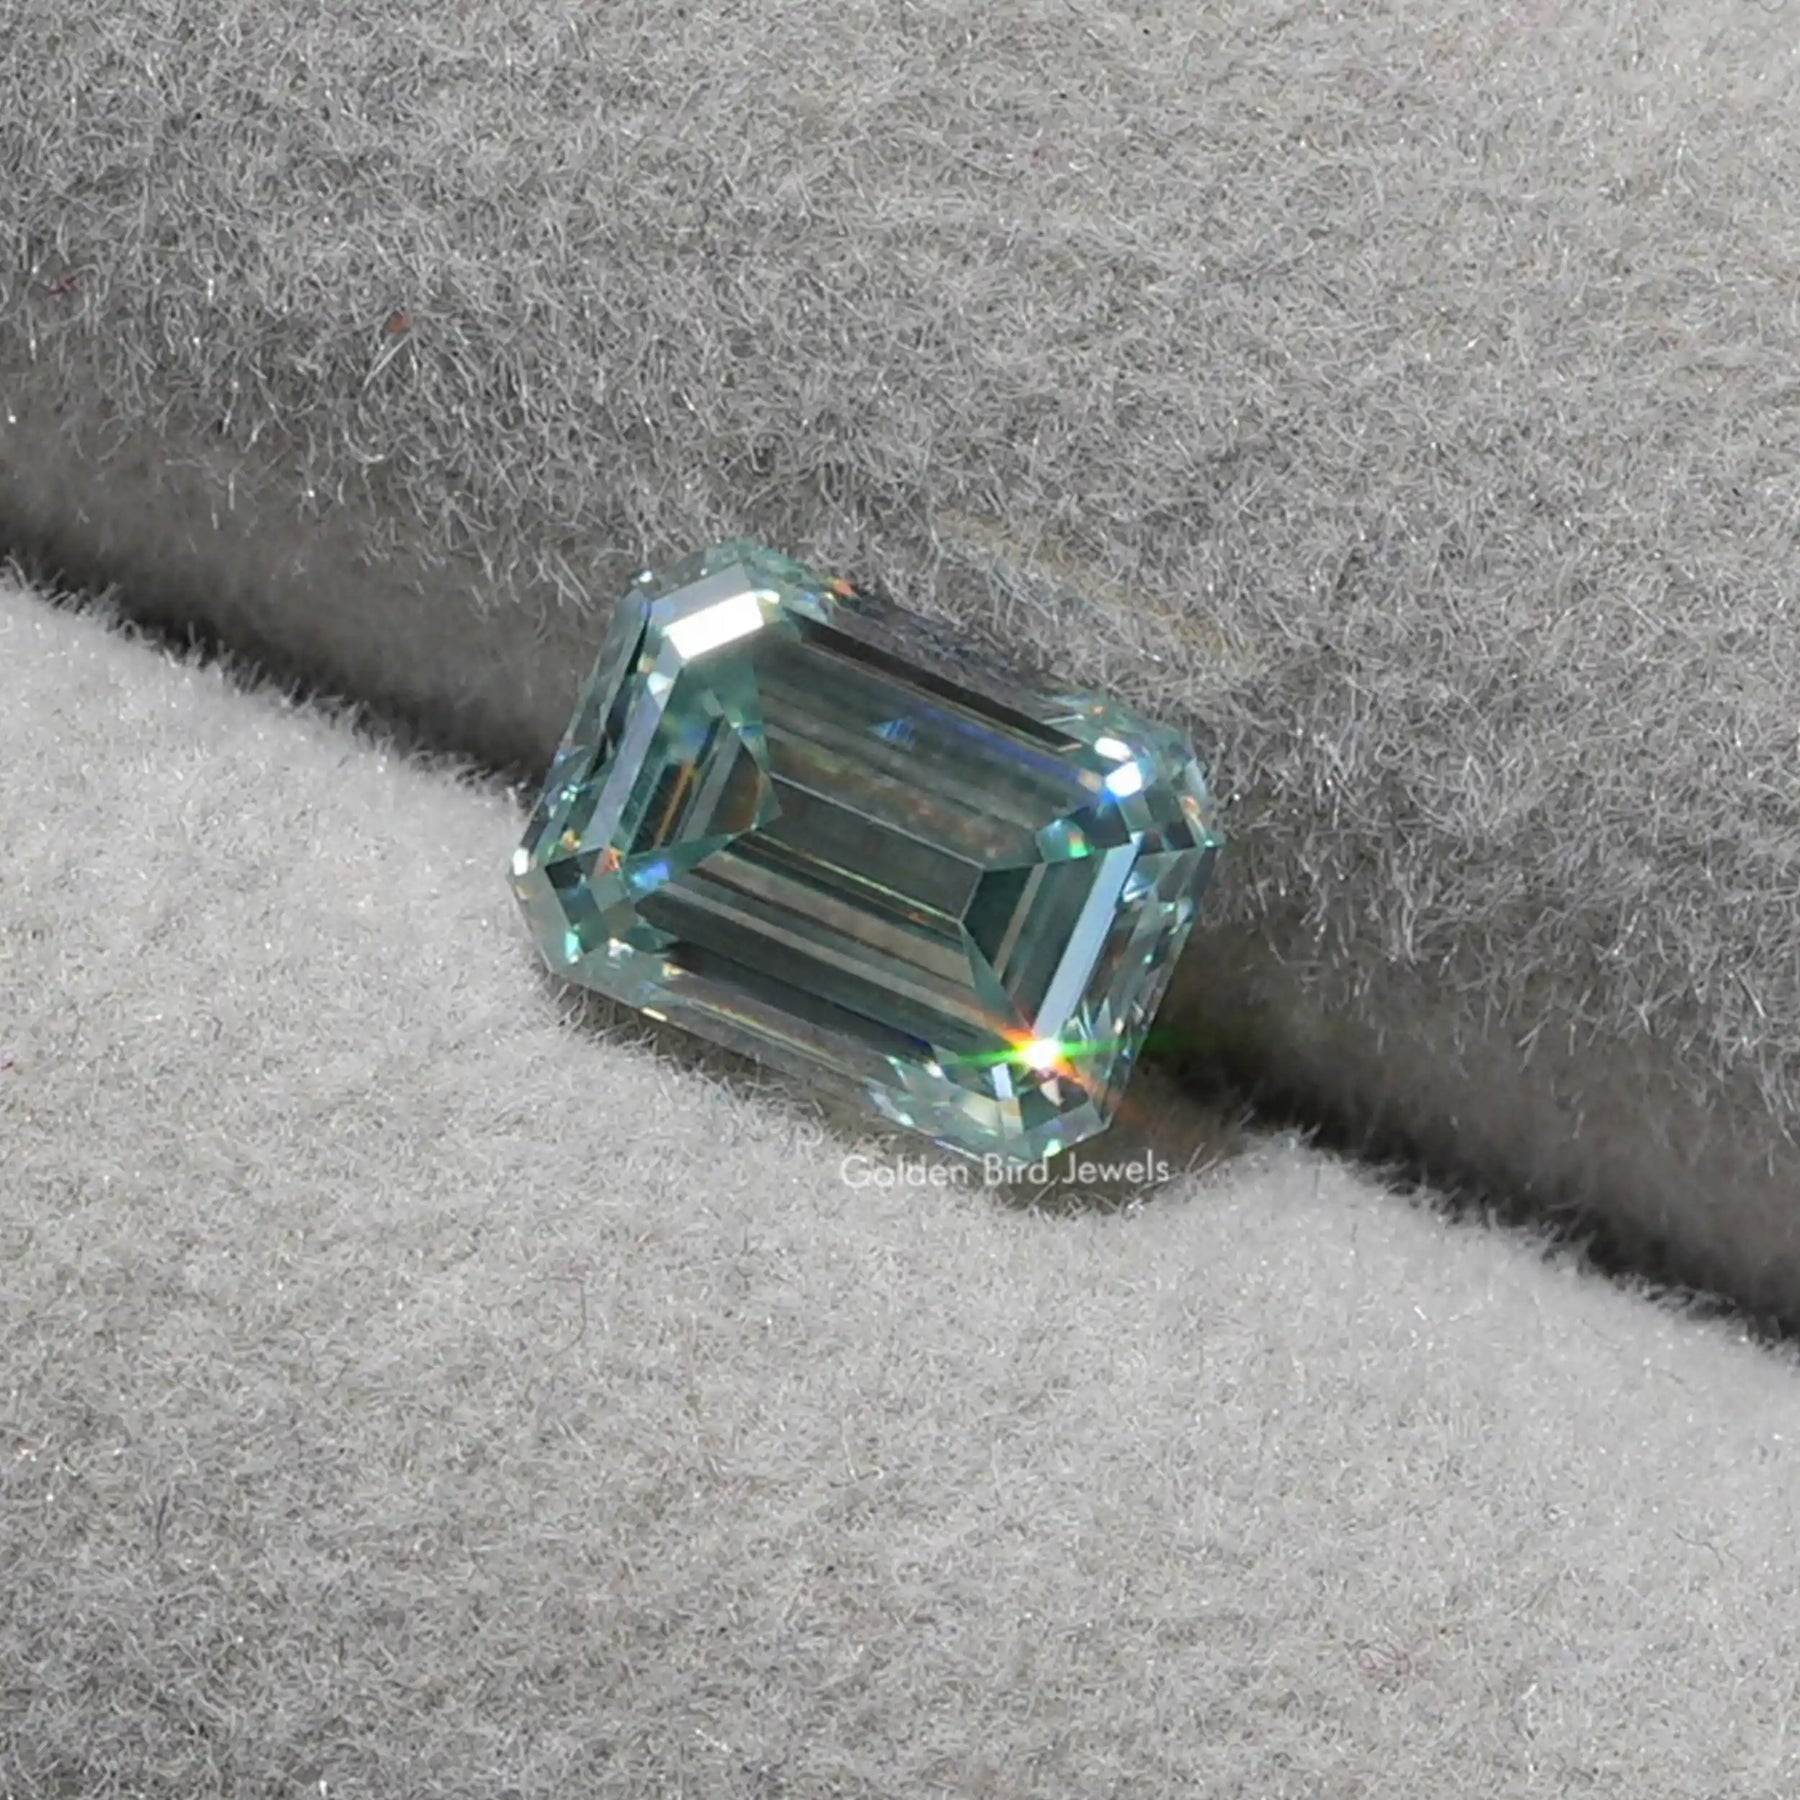 [Front view of emerald cut loose moissanite]-[Golden Bird Jewels]